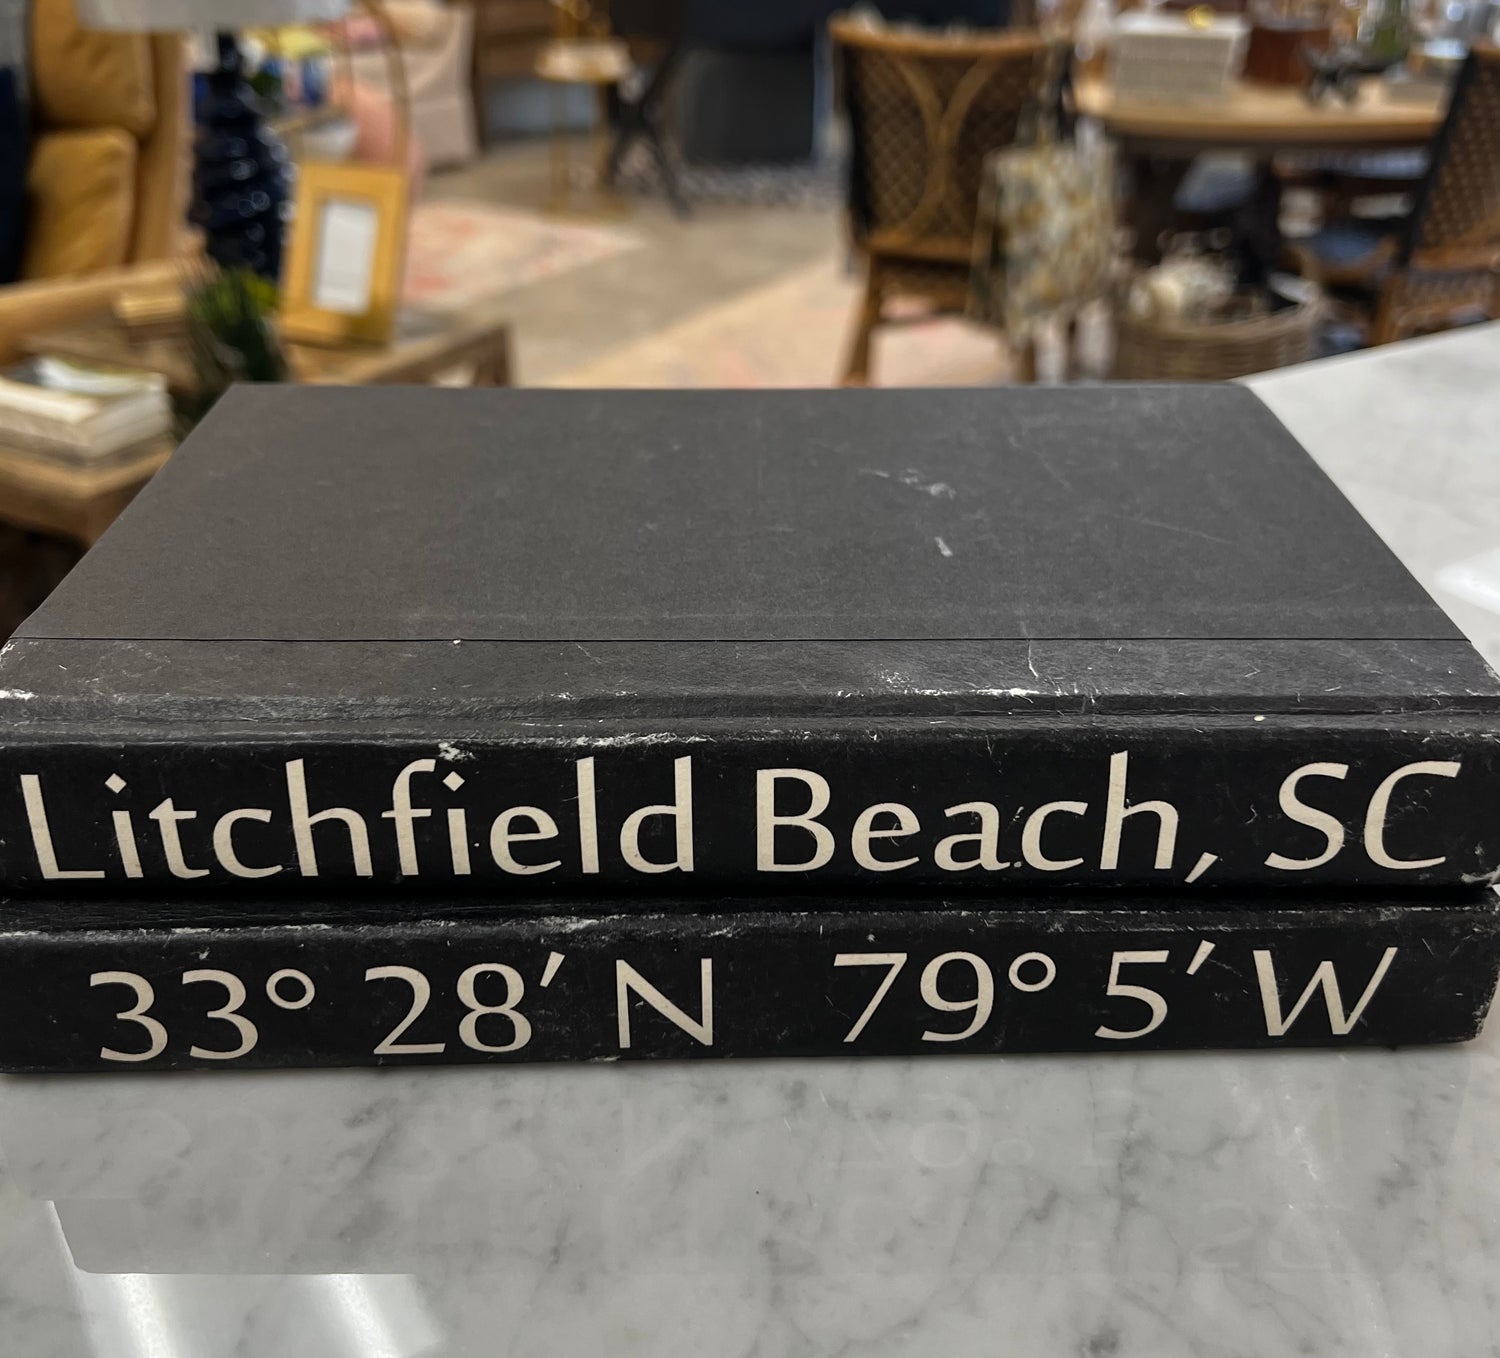 2 Vol City and Coordinates Book - Litchfield Beach